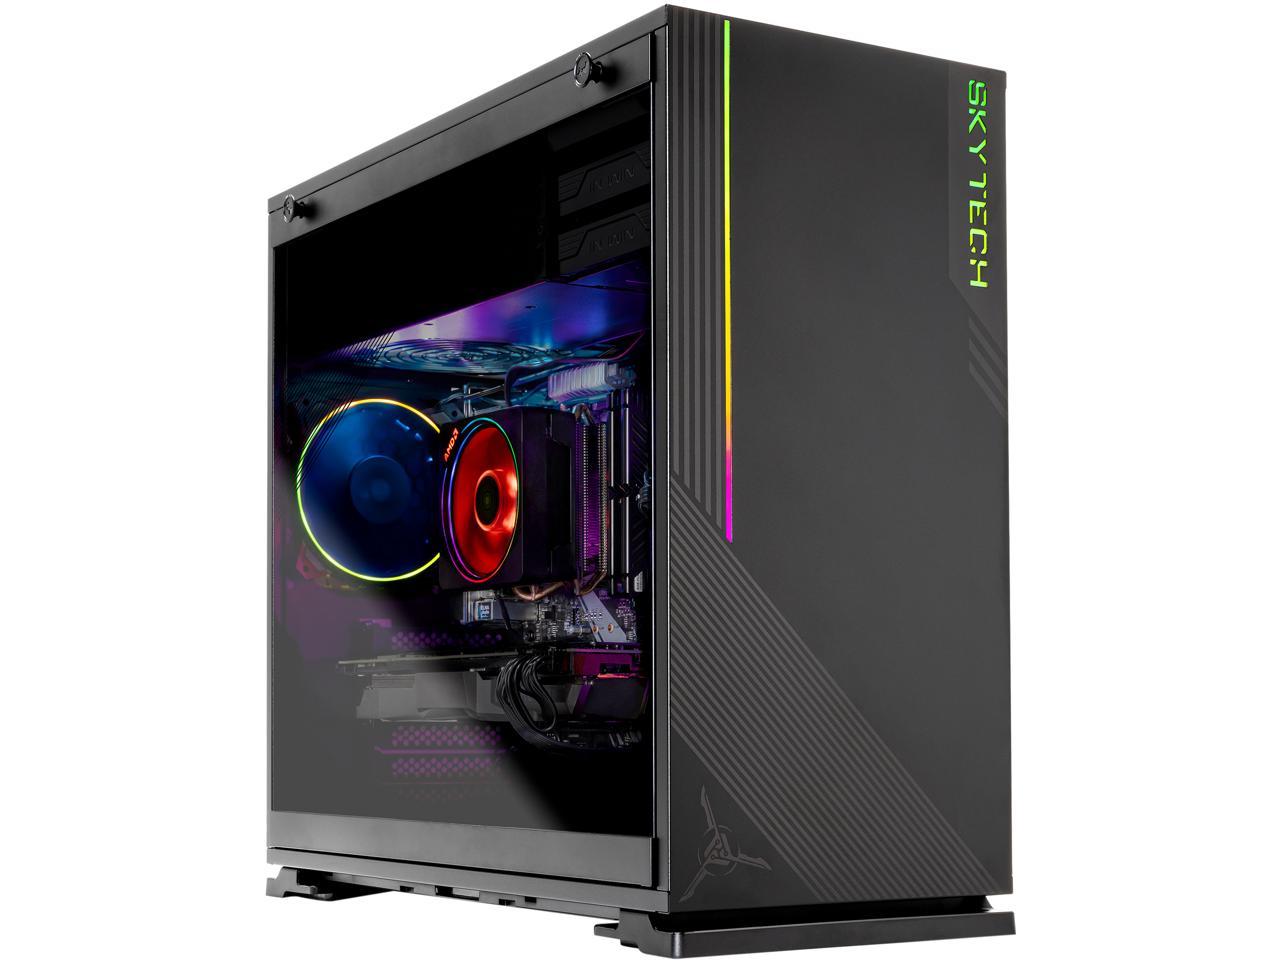 SkyTech - Gaming Desktop PC - AMD Ryzen 7 3700X (8-Core 3.6 GHz), NVIDIA GeForce RTX 2080 SUPER (8 GB), 16 GB DDR4, 1 TB SSD, AMD B450, Windows 10 Home 64-bit, Azure